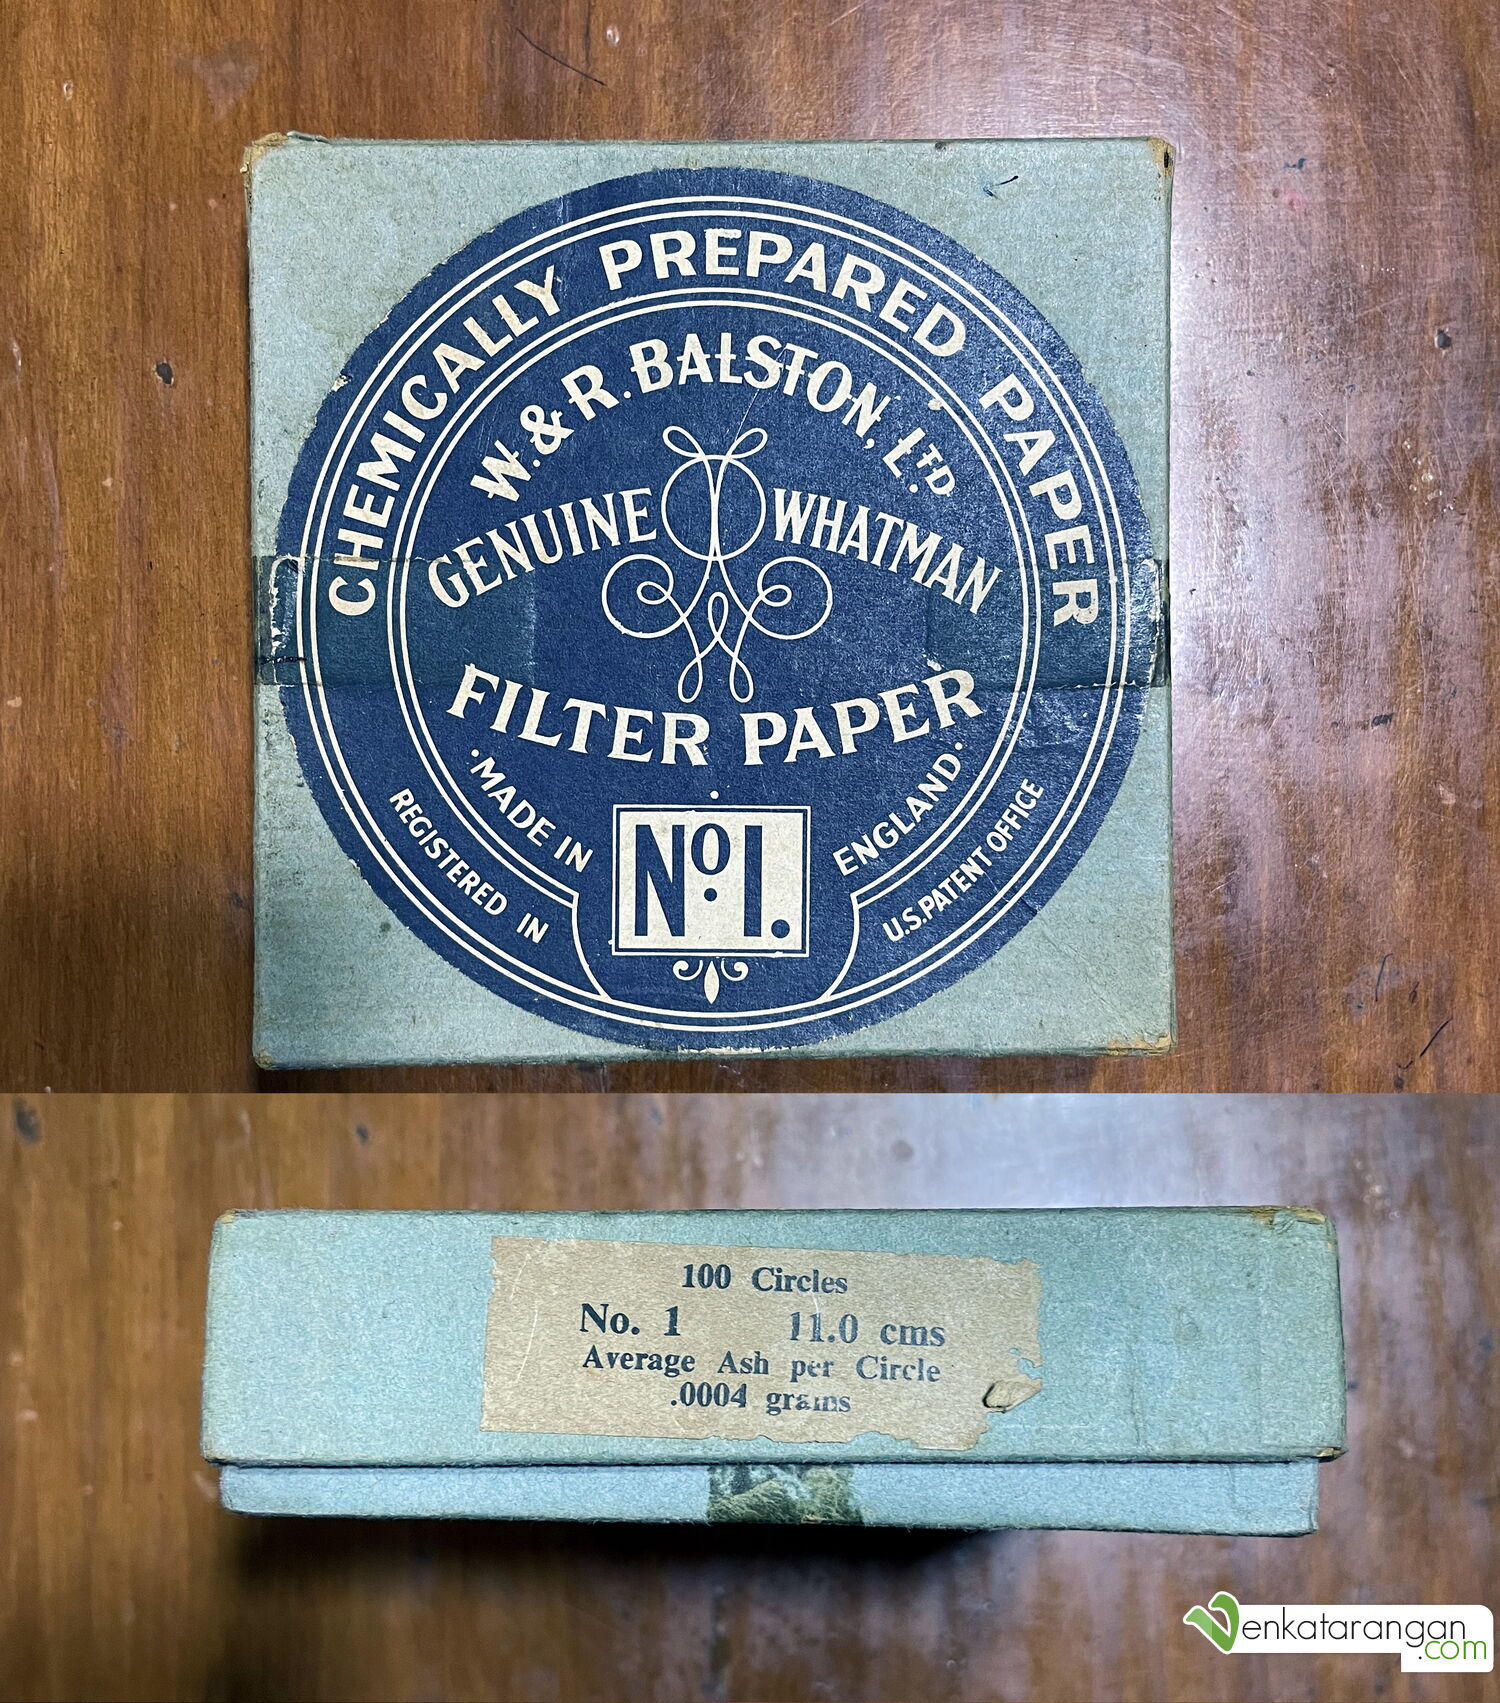 W & R Balston Ltd Whatman Filter Paper No 1 Made in England box